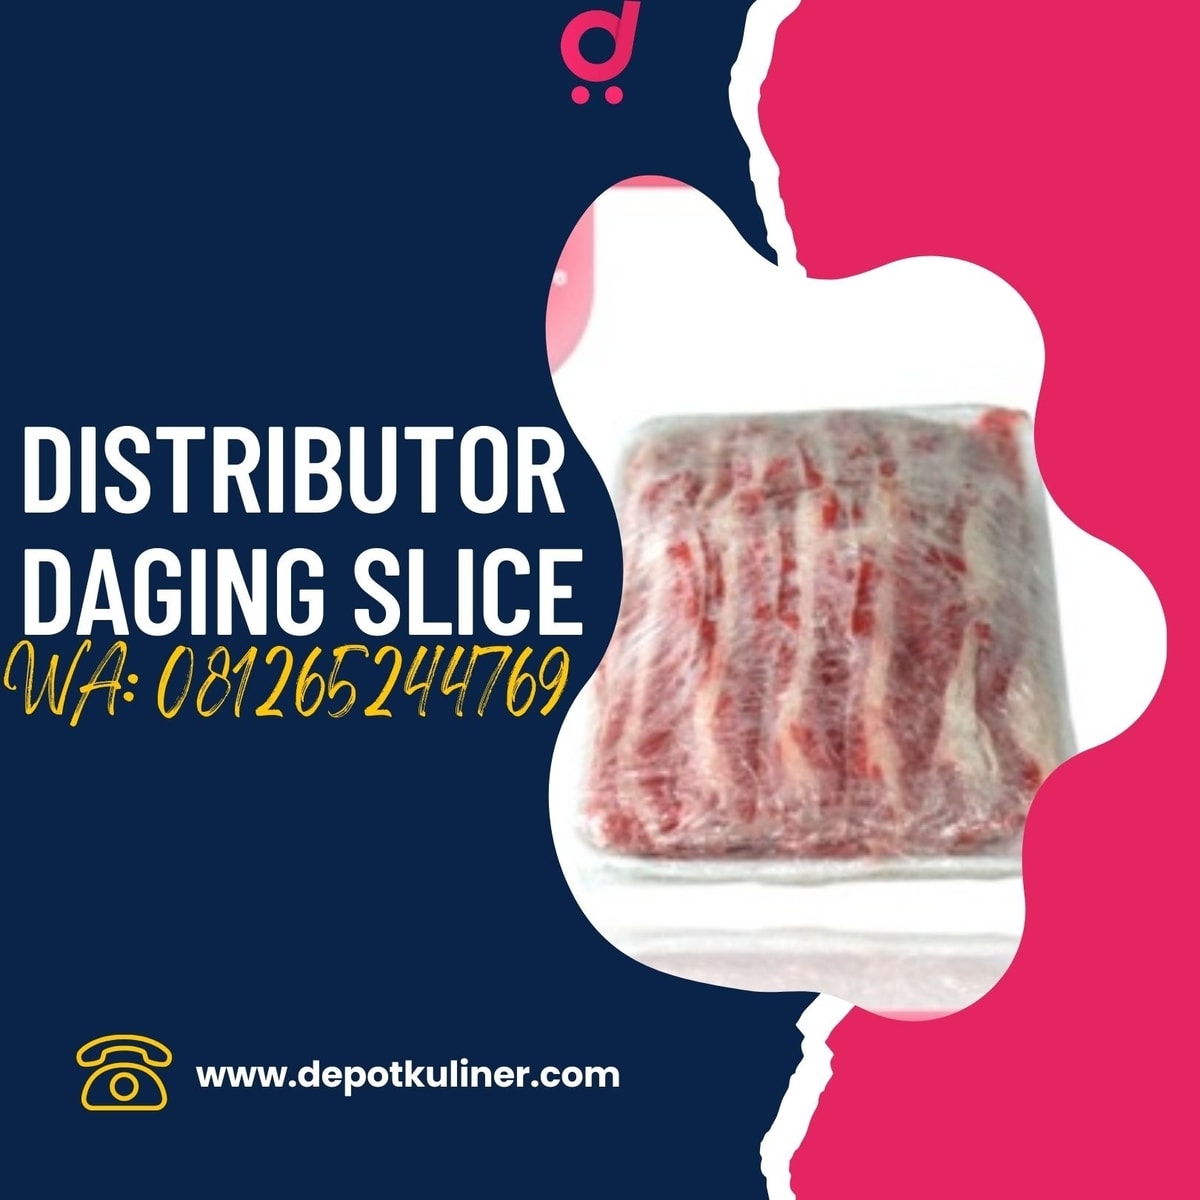 HARGA MIRING, 0812-6524-4769 Distributor Daging Slice